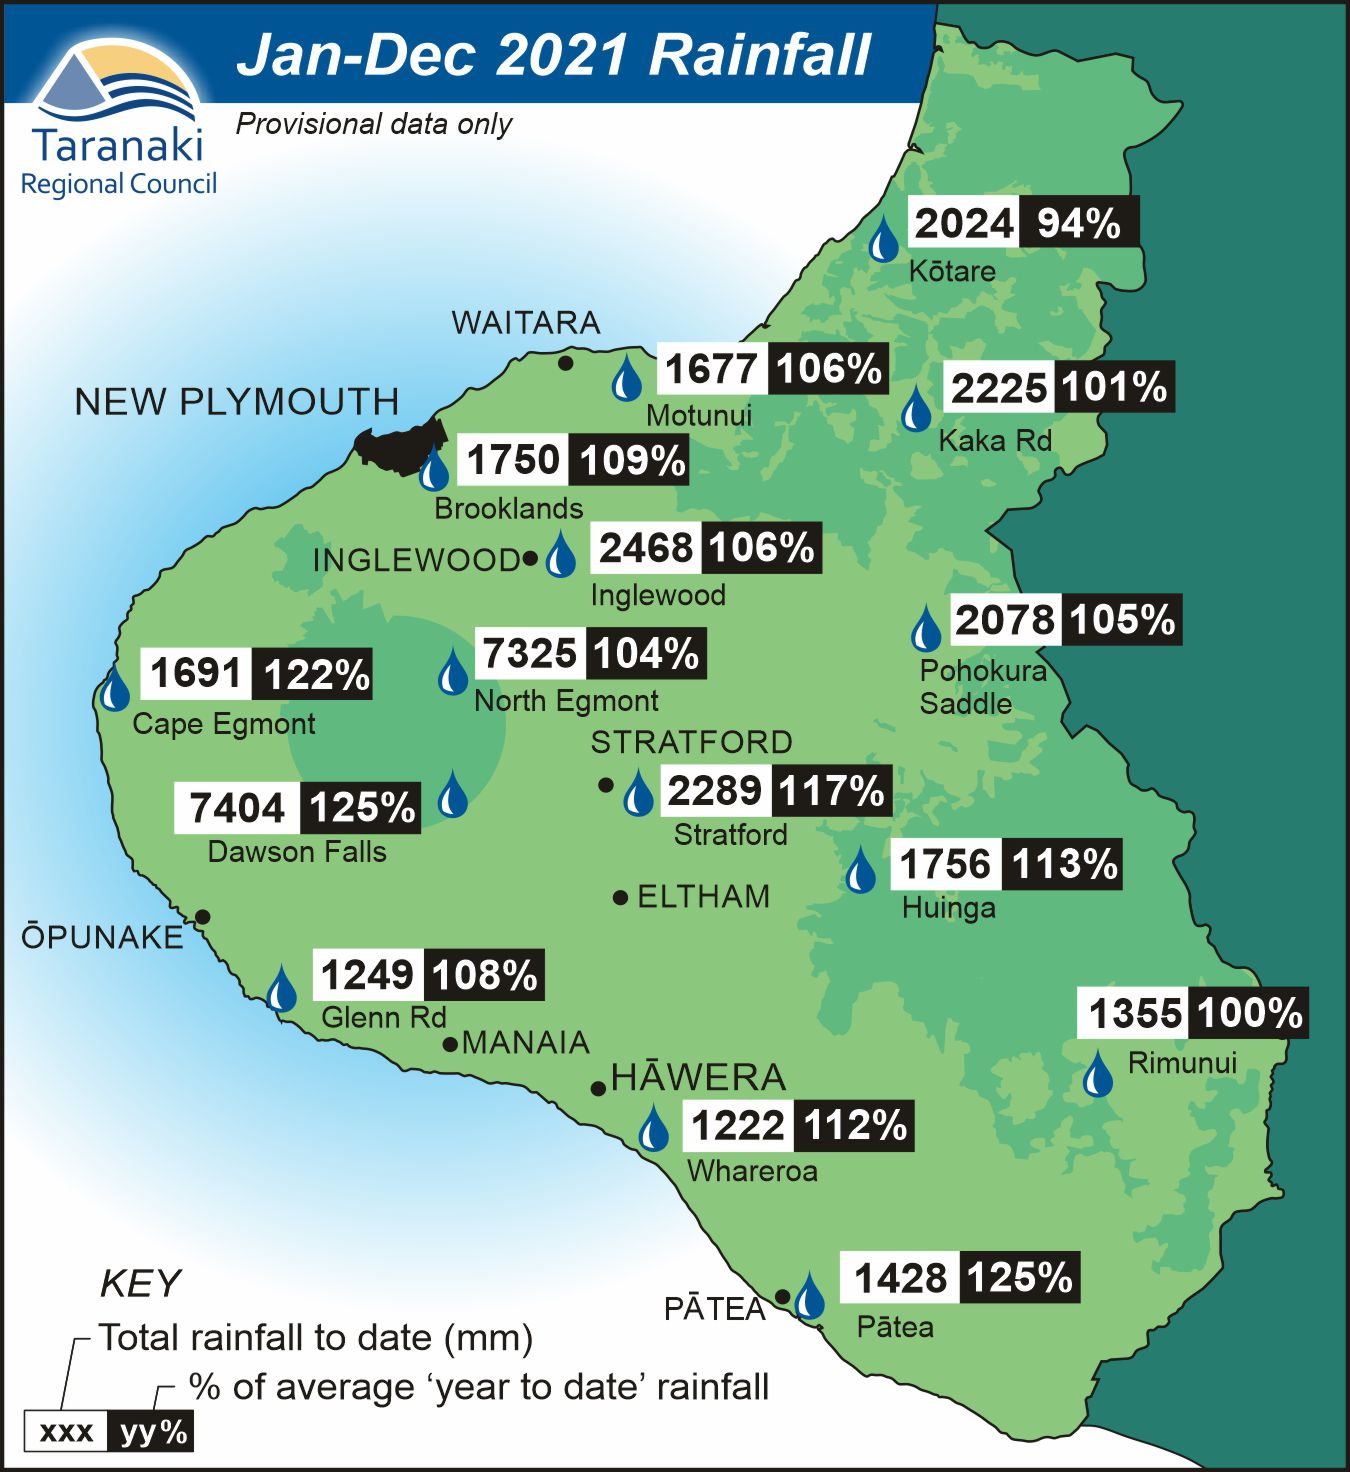 January-December 2021 rainfall